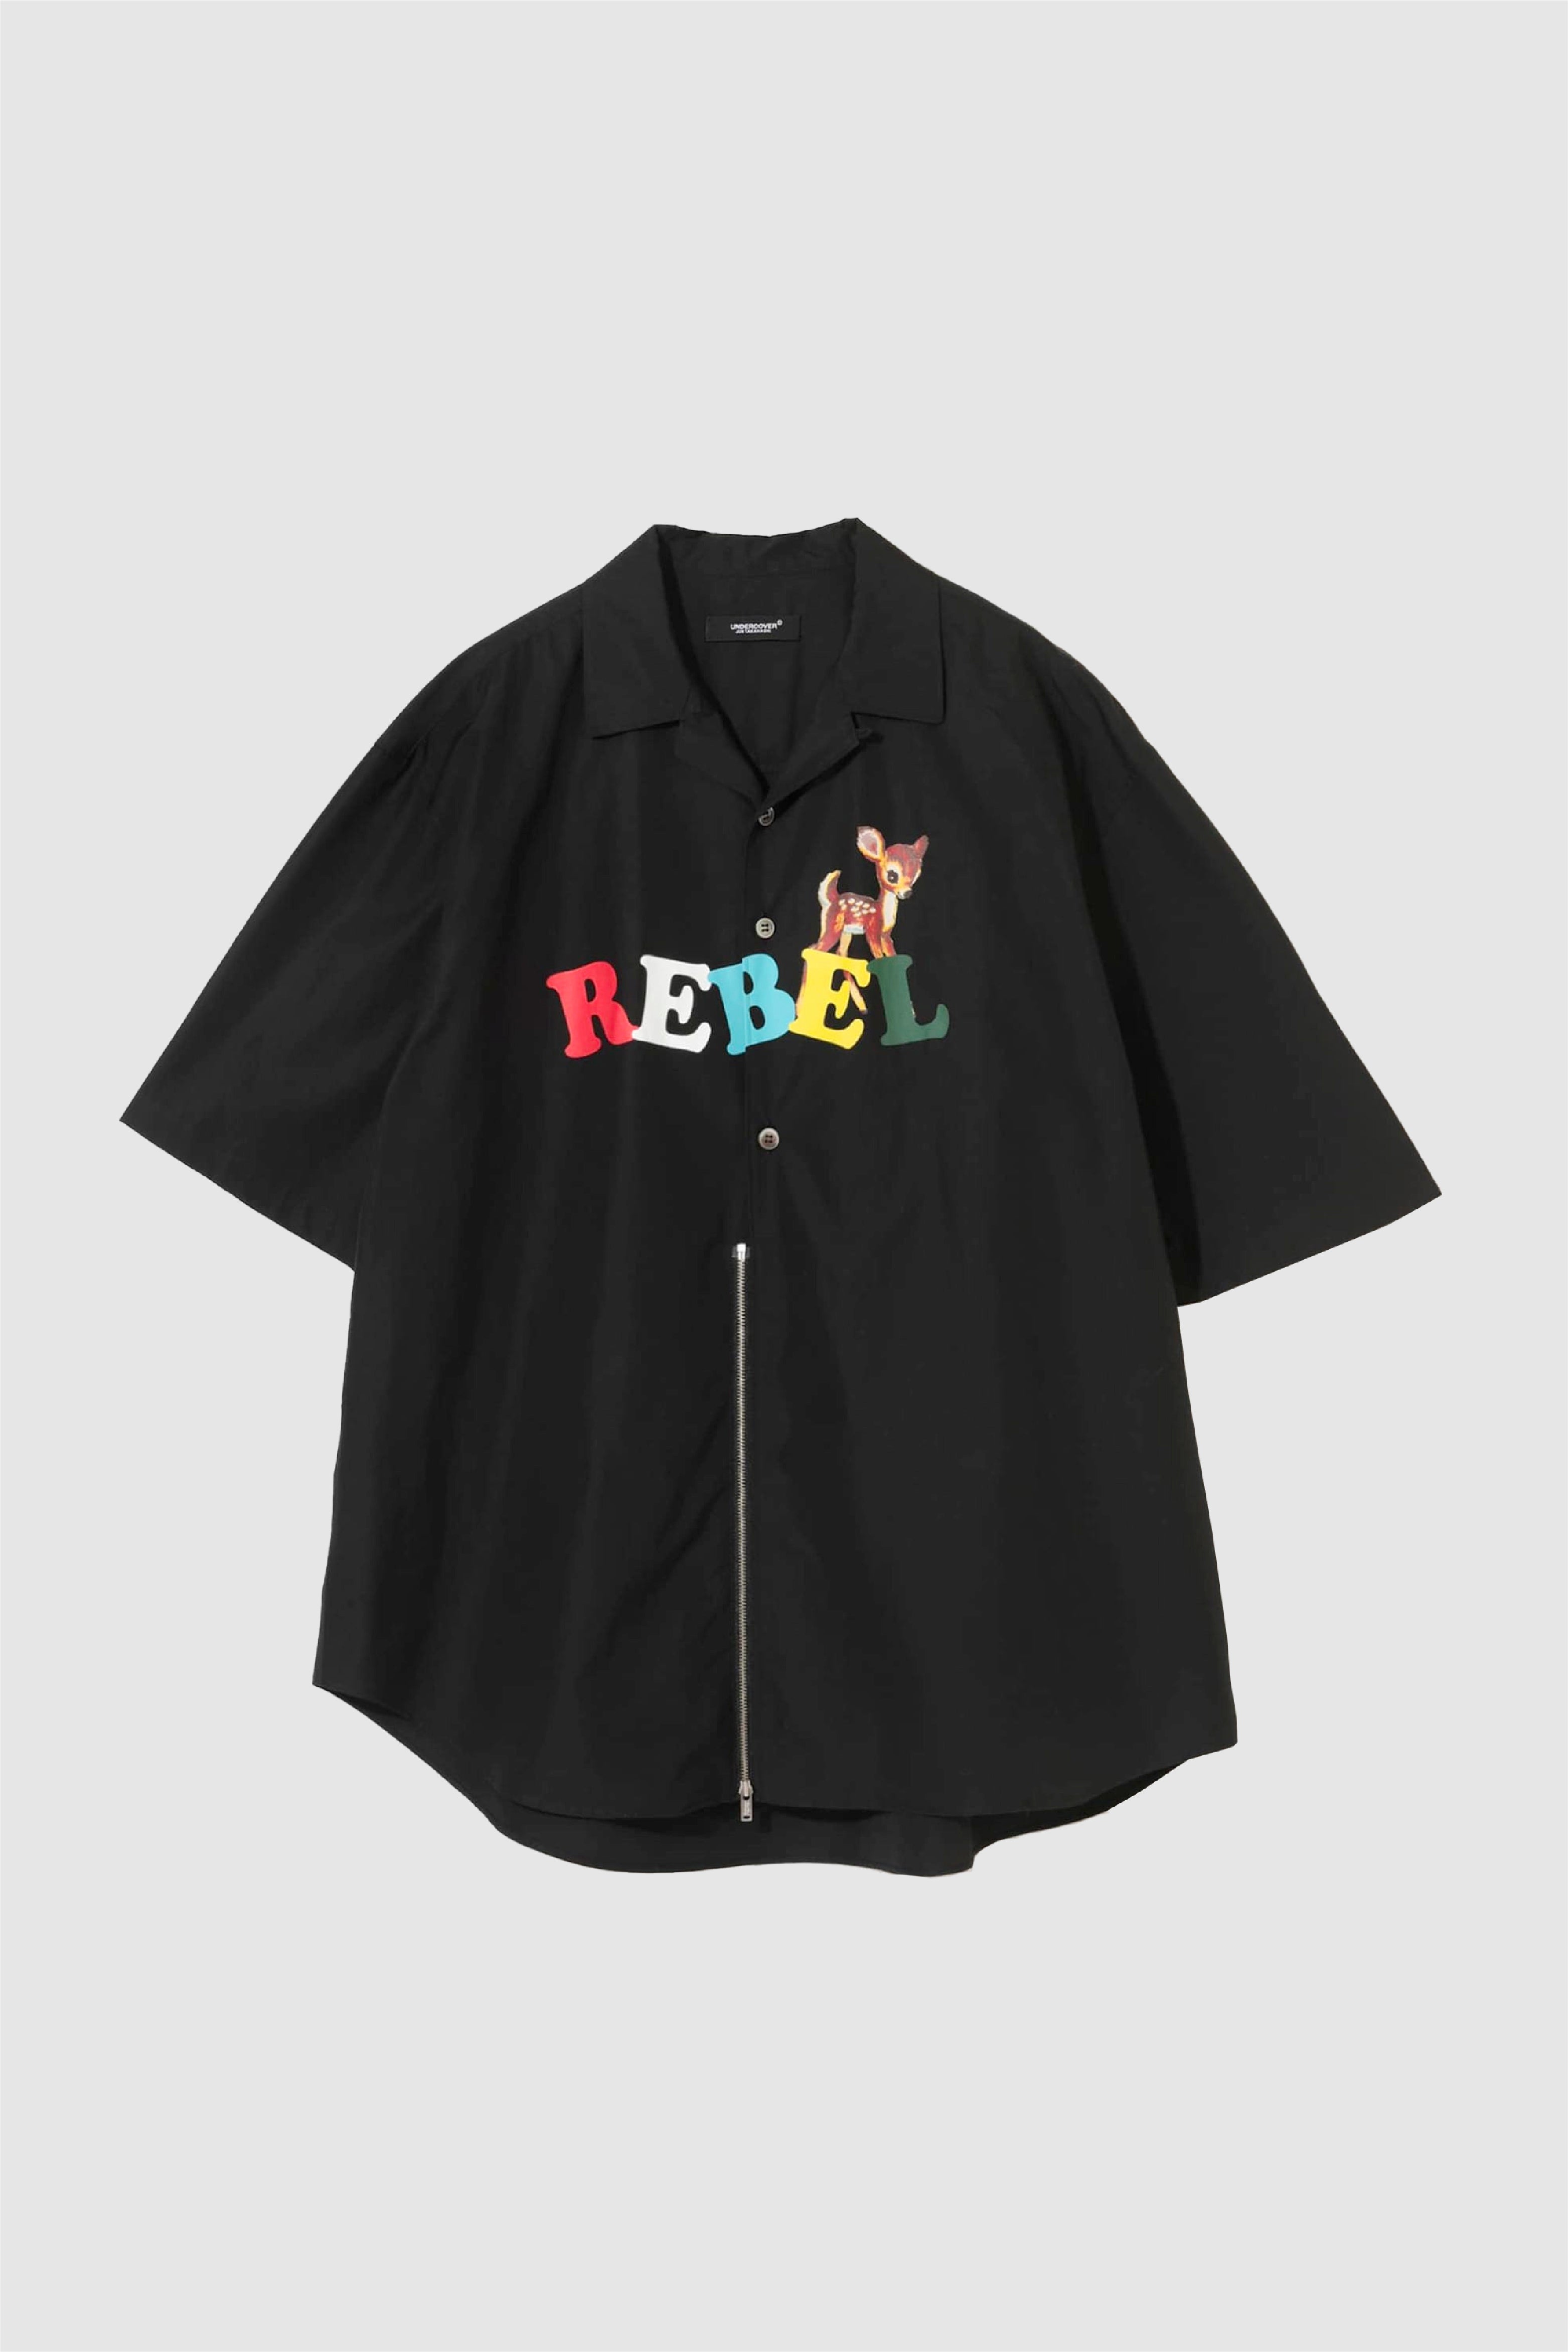 Selectshop FRAME - UNDERCOVER Rebel Shirt Shirts Concept Store Dubai